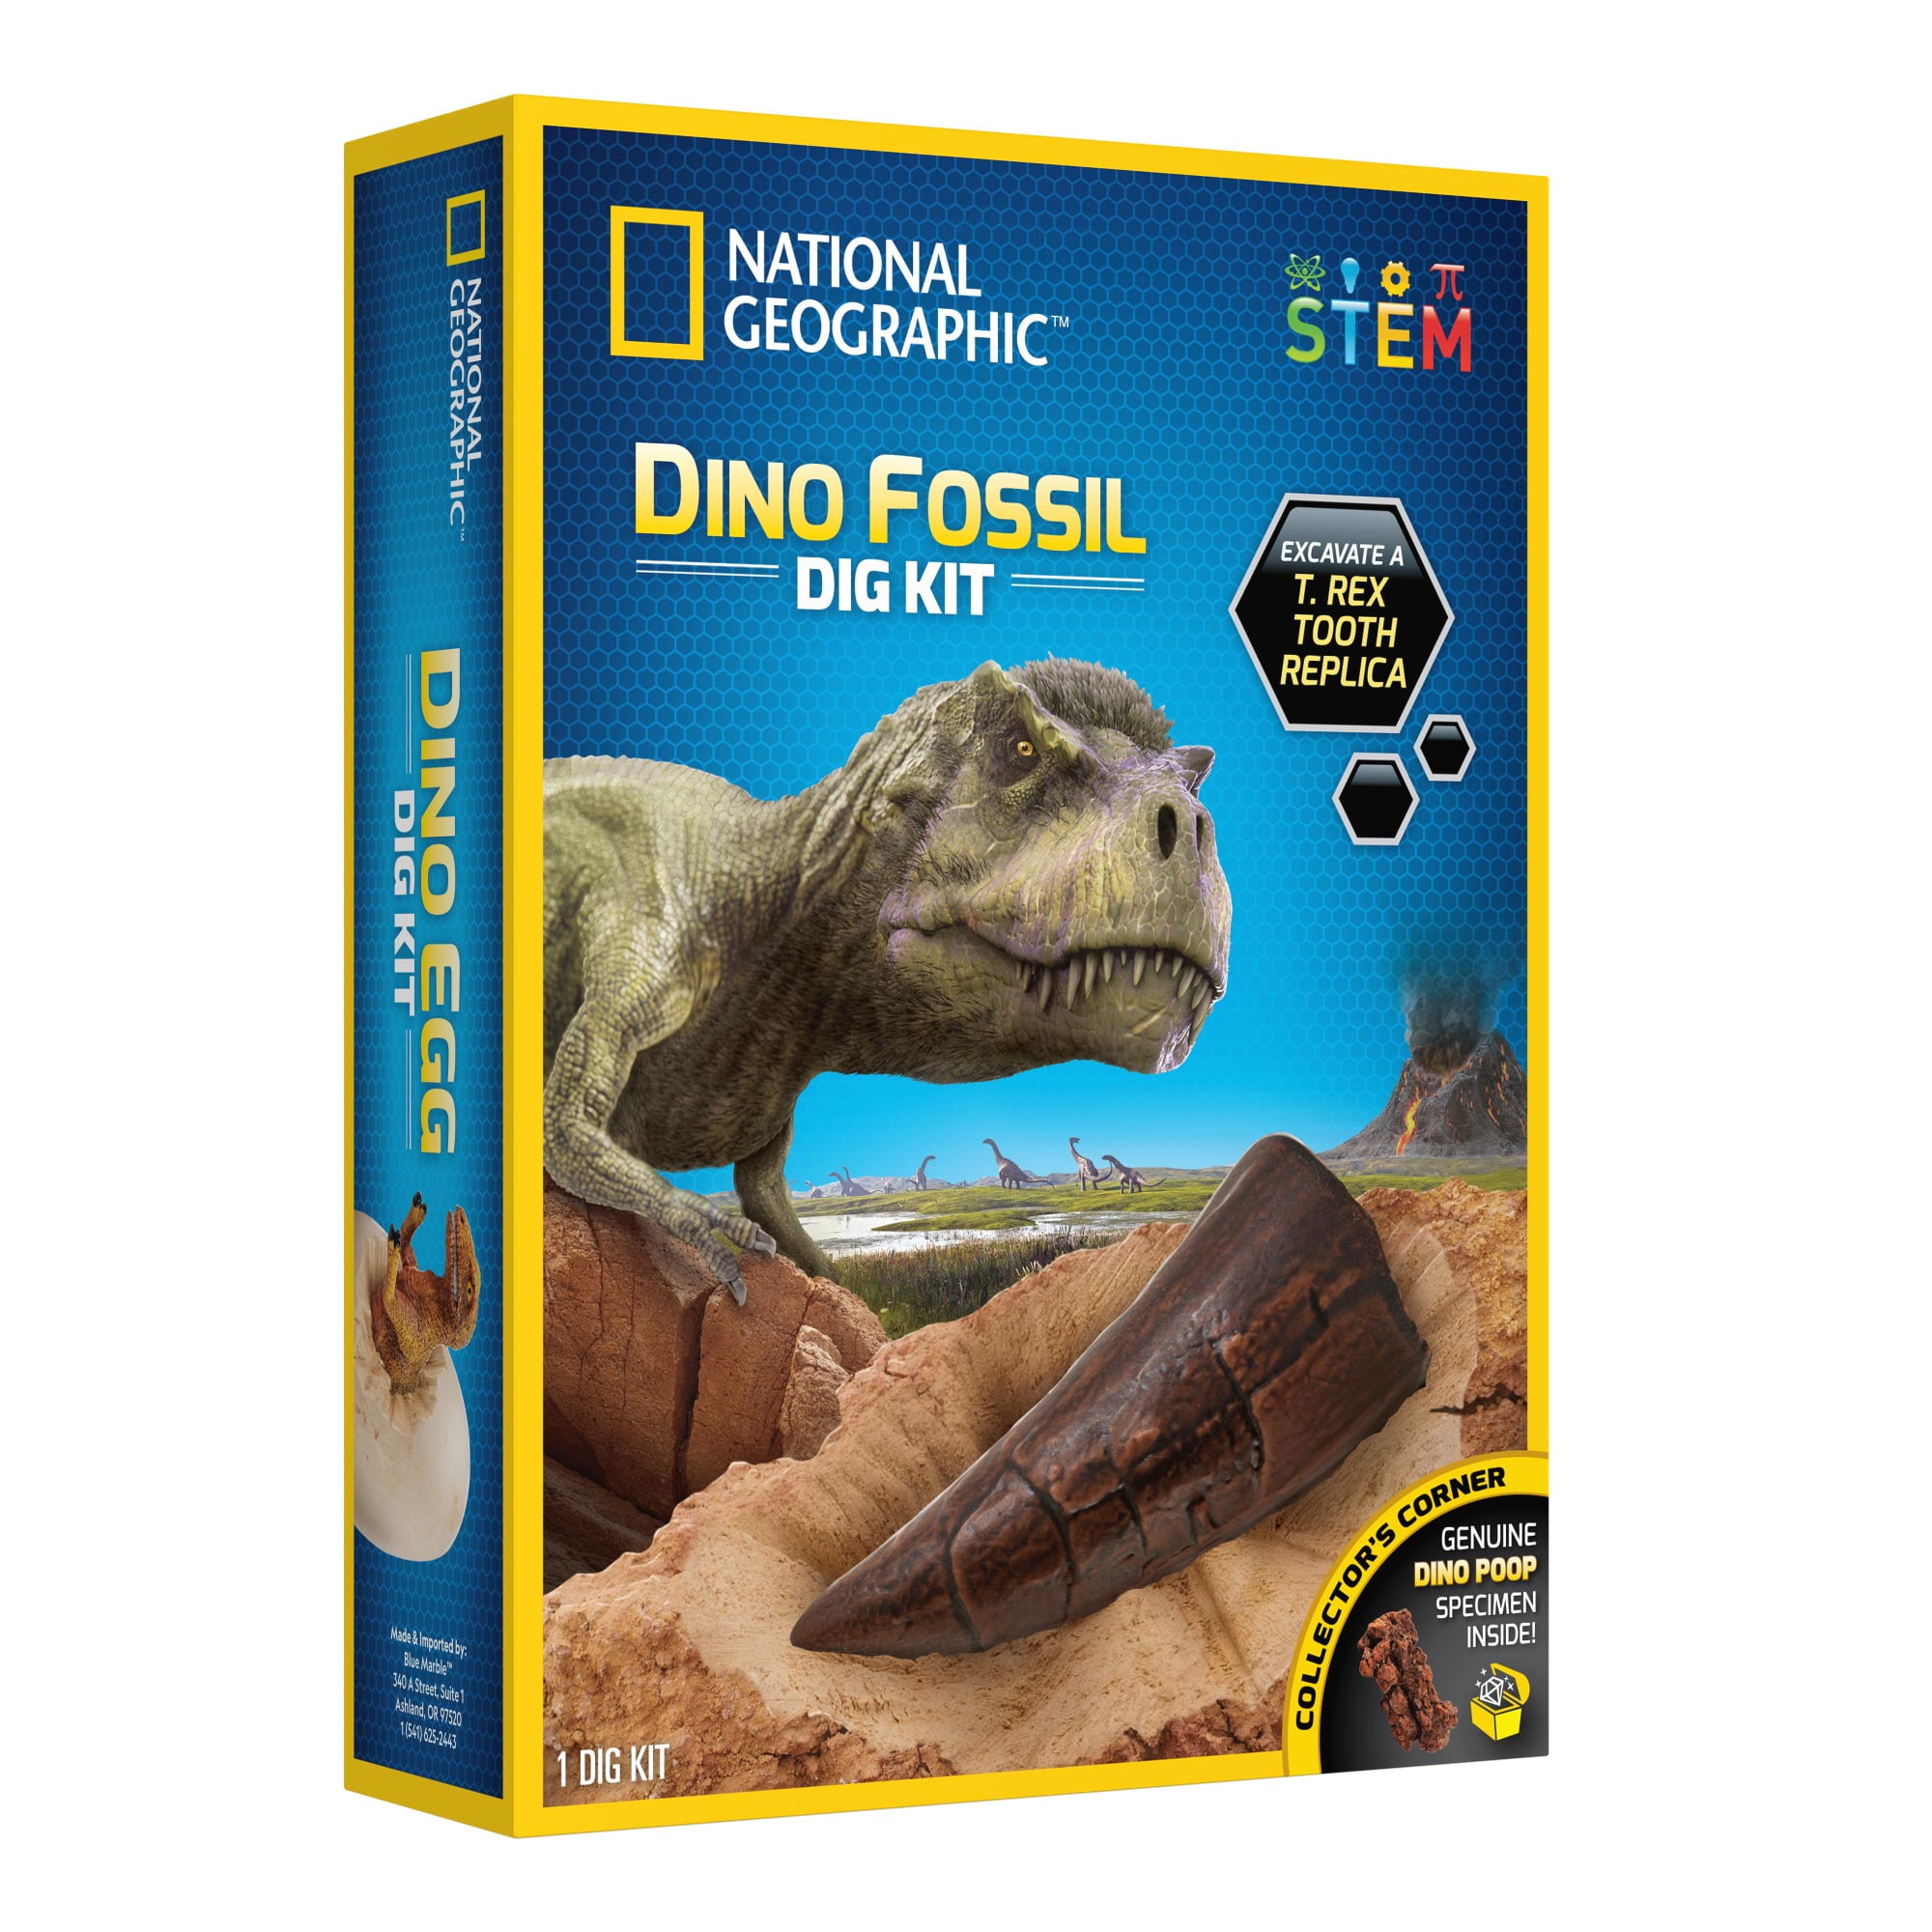 Dig It up T Rex Dinosaur Excavation Kids Science Kit Stegosaurus 2002 Fozex for sale online 